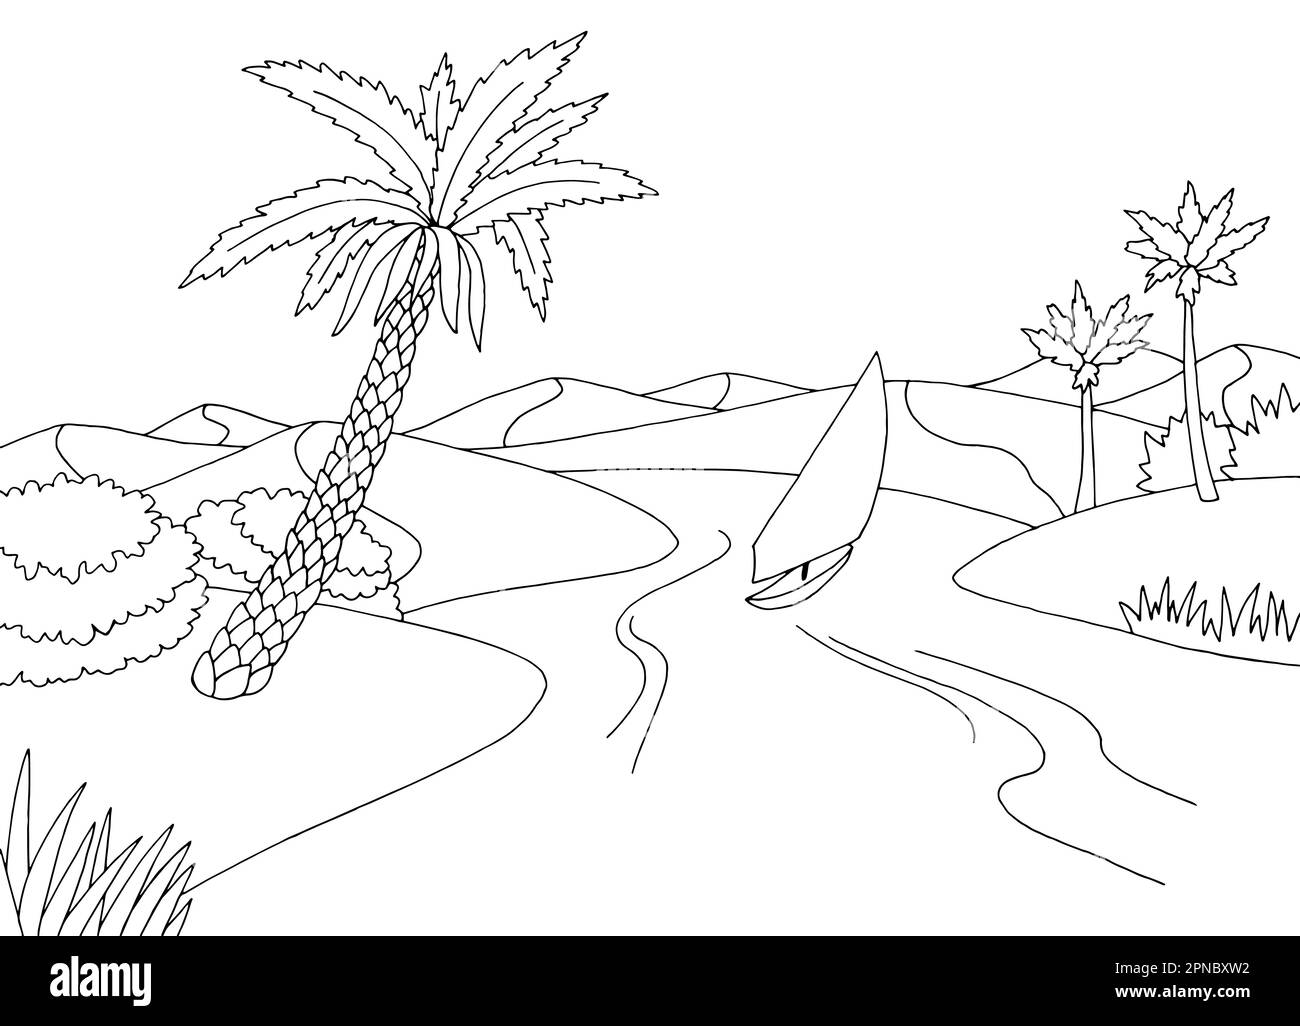 Wüste Fluss Grafik schwarz weiß Landschaft Skizze Illustration Vektor Stock Vektor